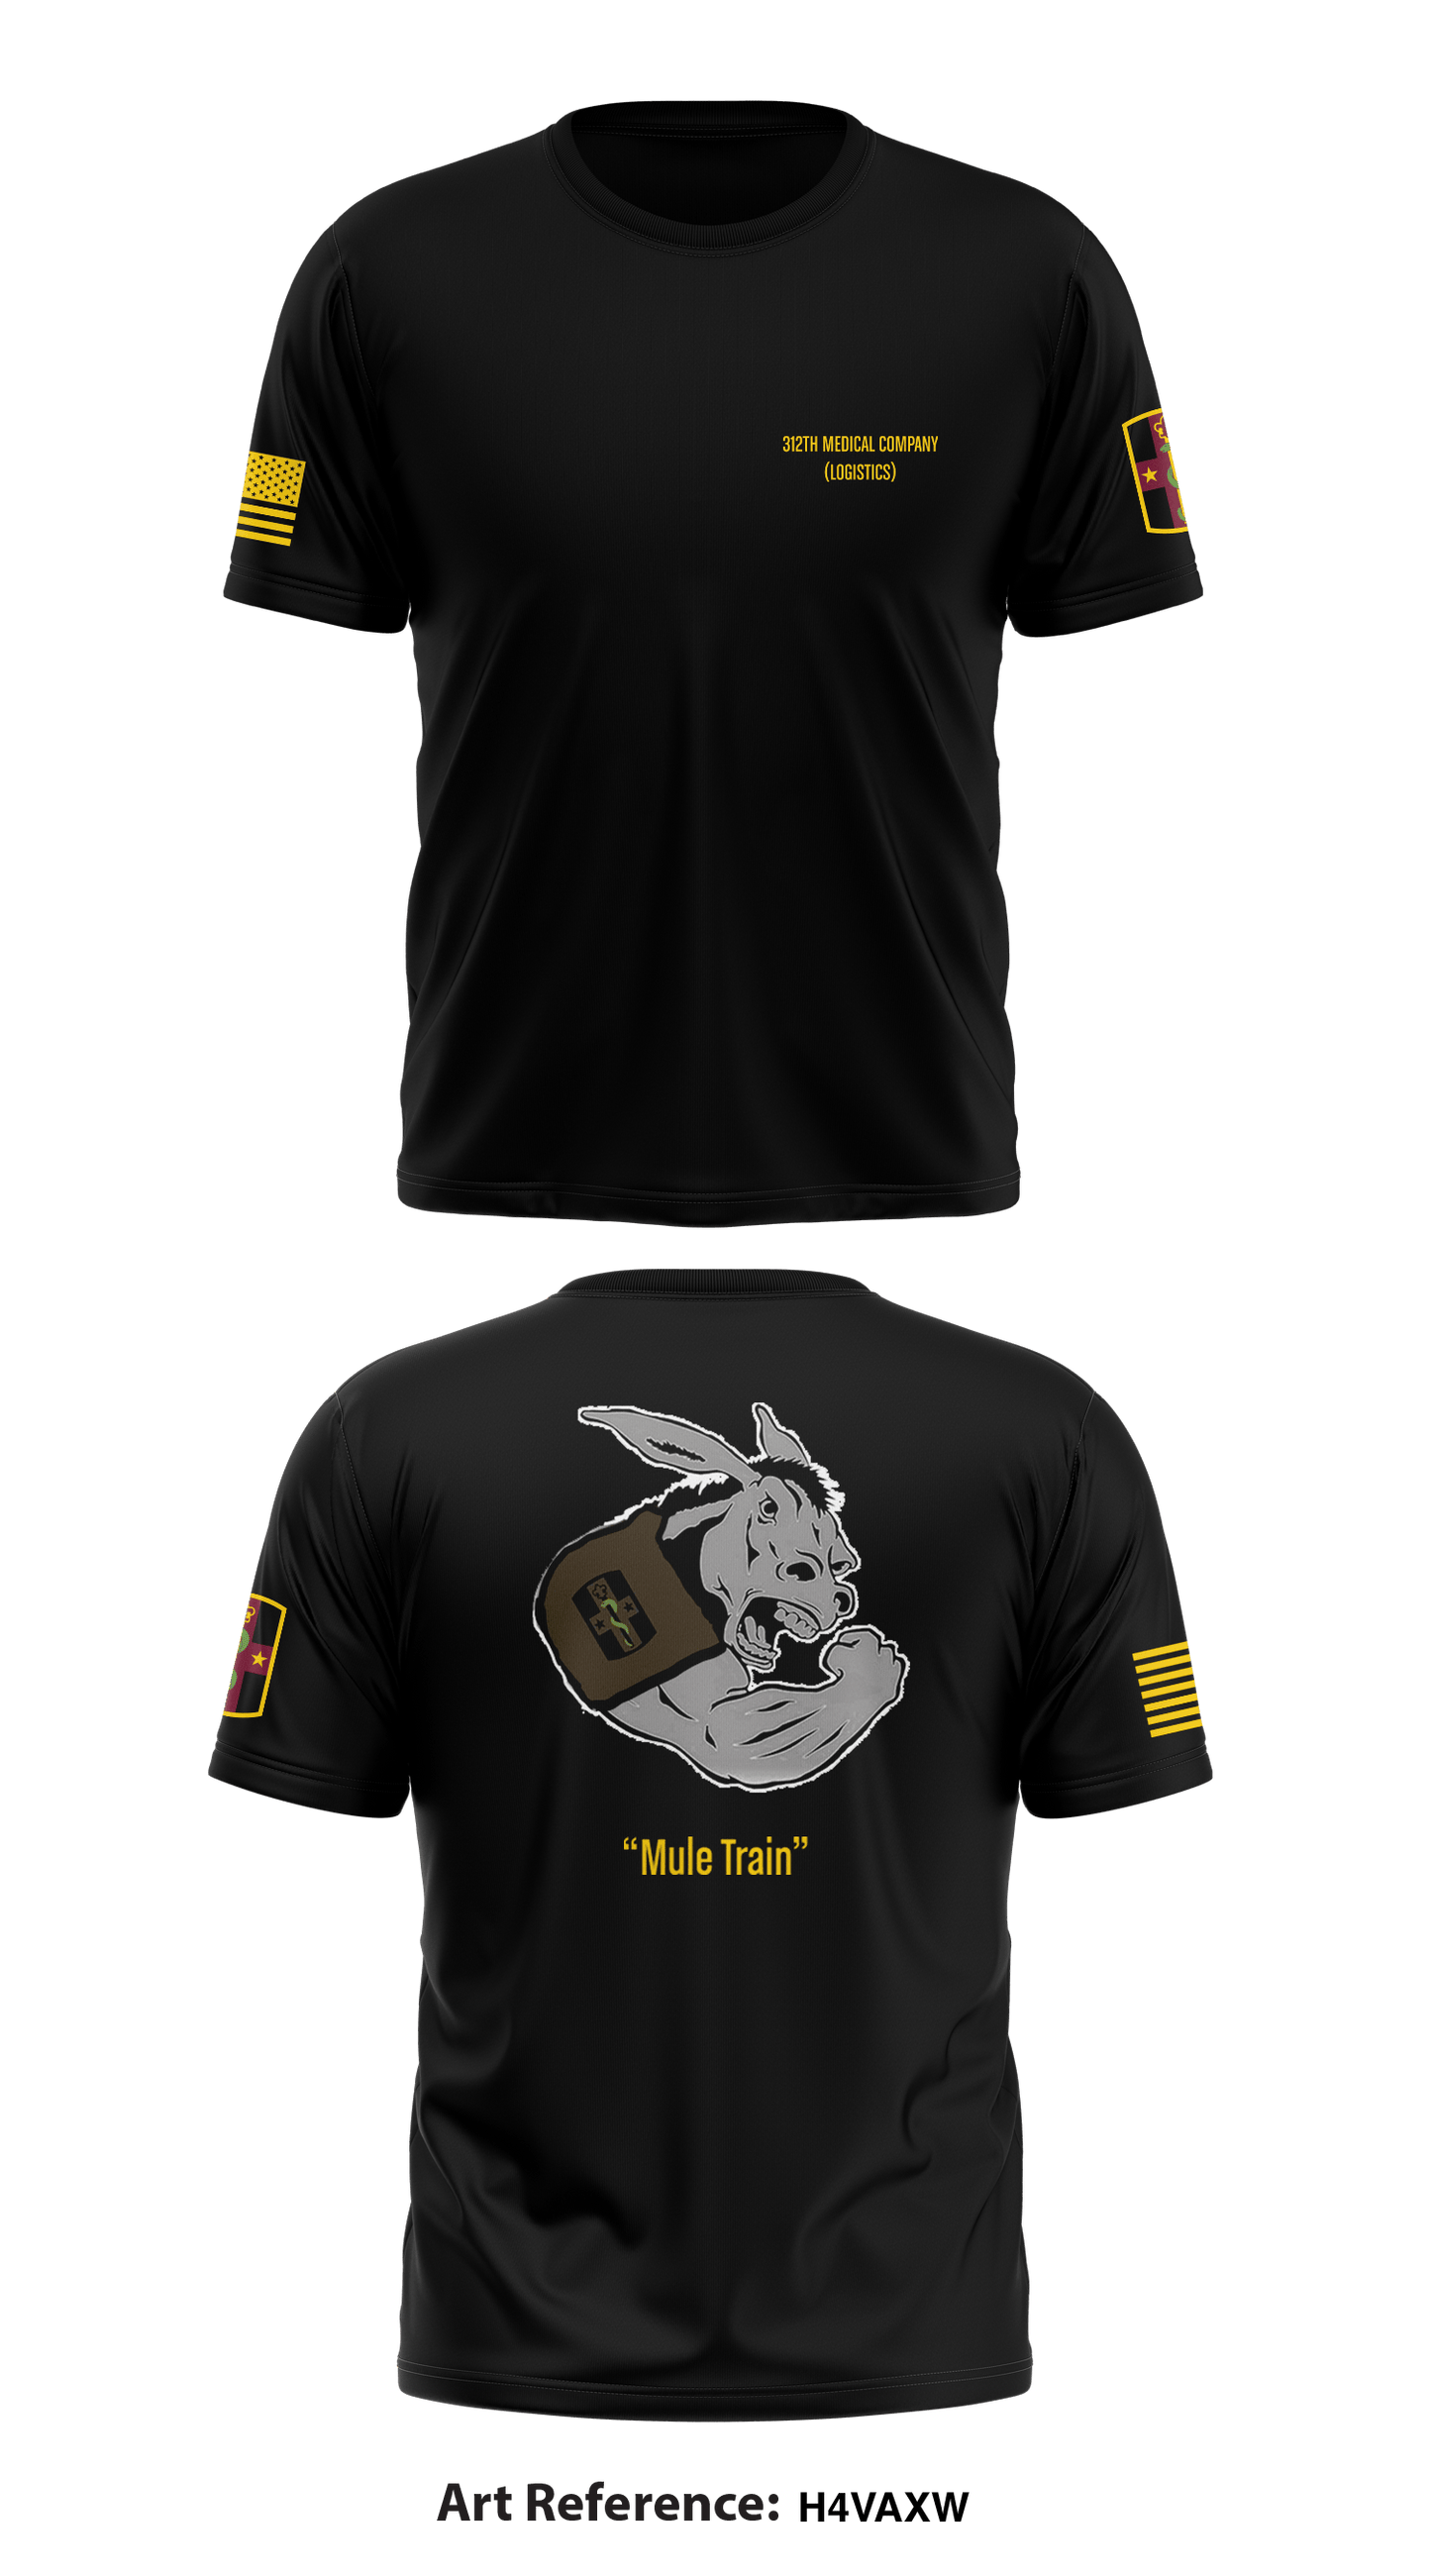 312th Pt shirt Store 1 Short-Sleeve Hybrid Performance Shirt